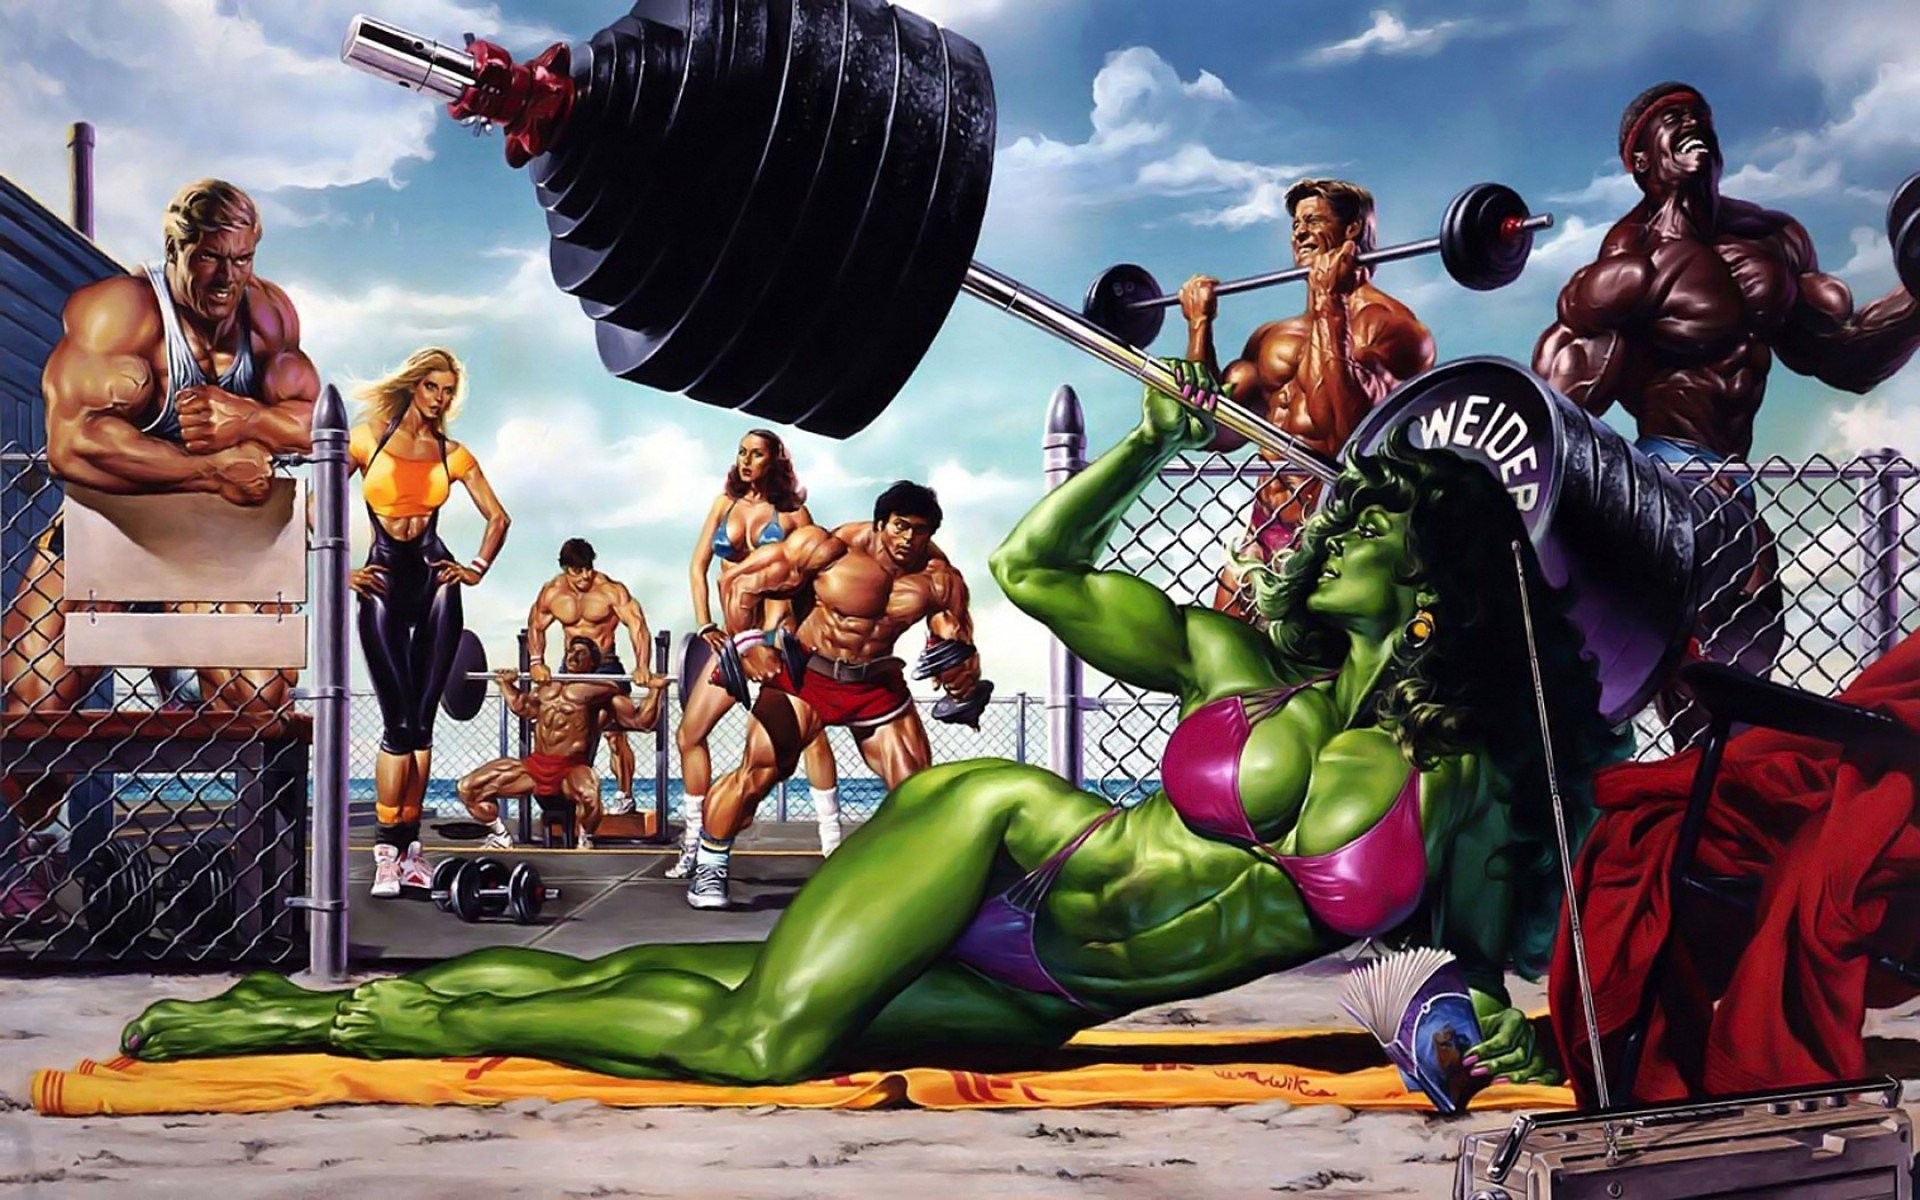 1920x1200 She-Hulk images She-Hulk - Bikini Weight Lifting HD wallpaper and  background photos